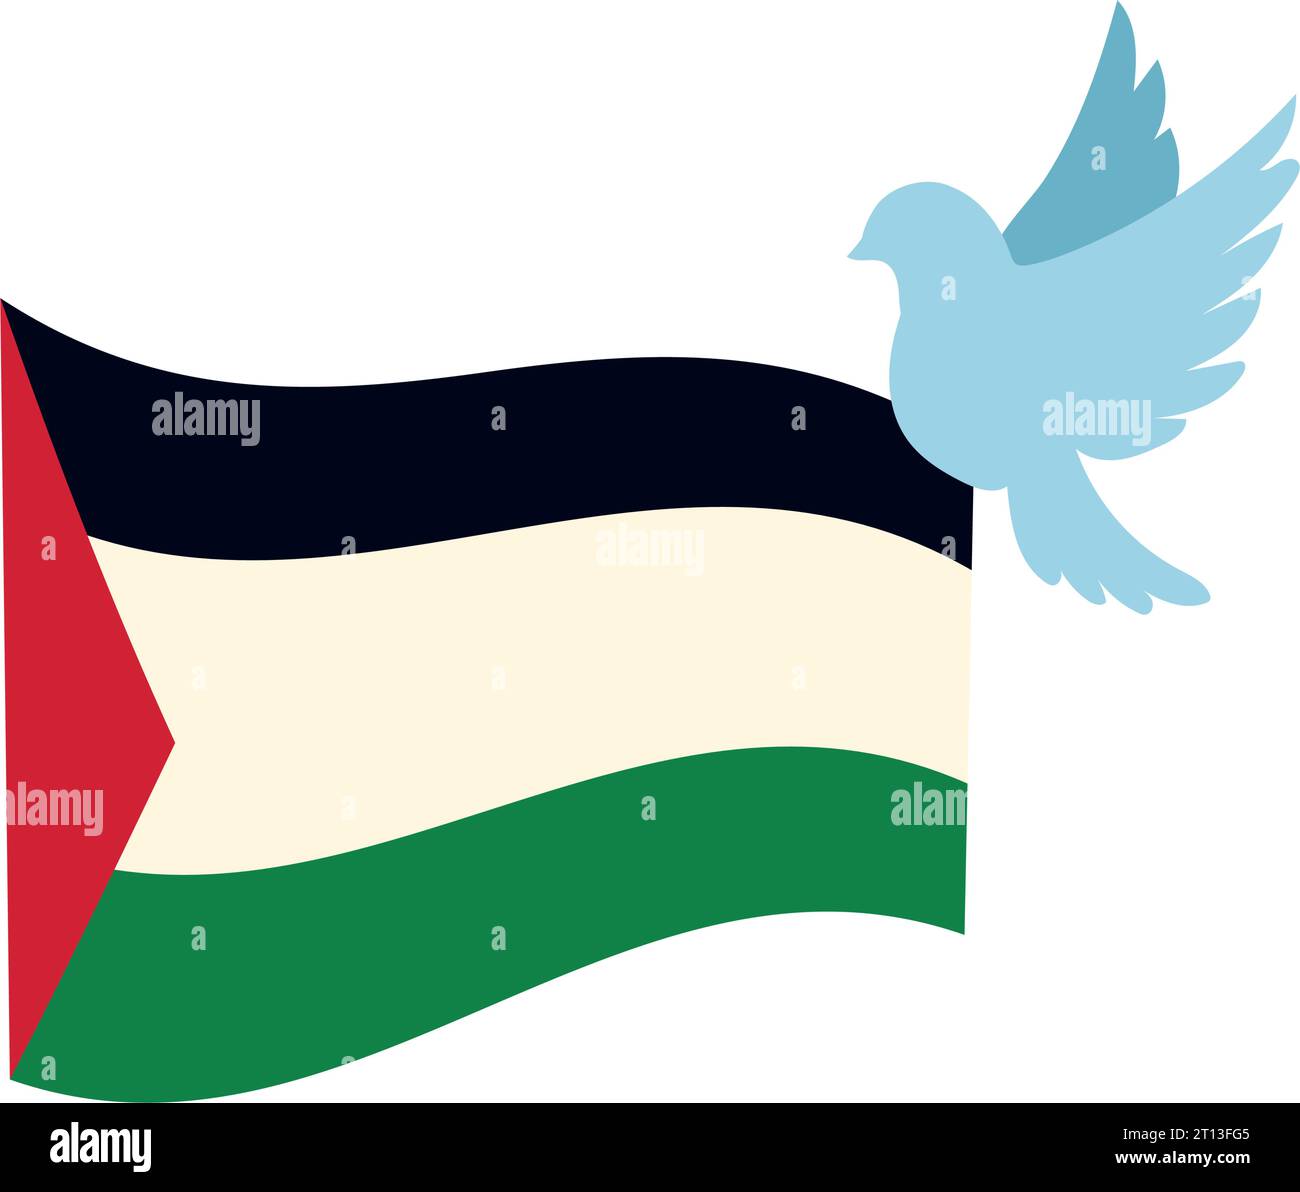 palästina-Flagge mit Friedenstaube-Design Stock-Vektorgrafik - Alamy